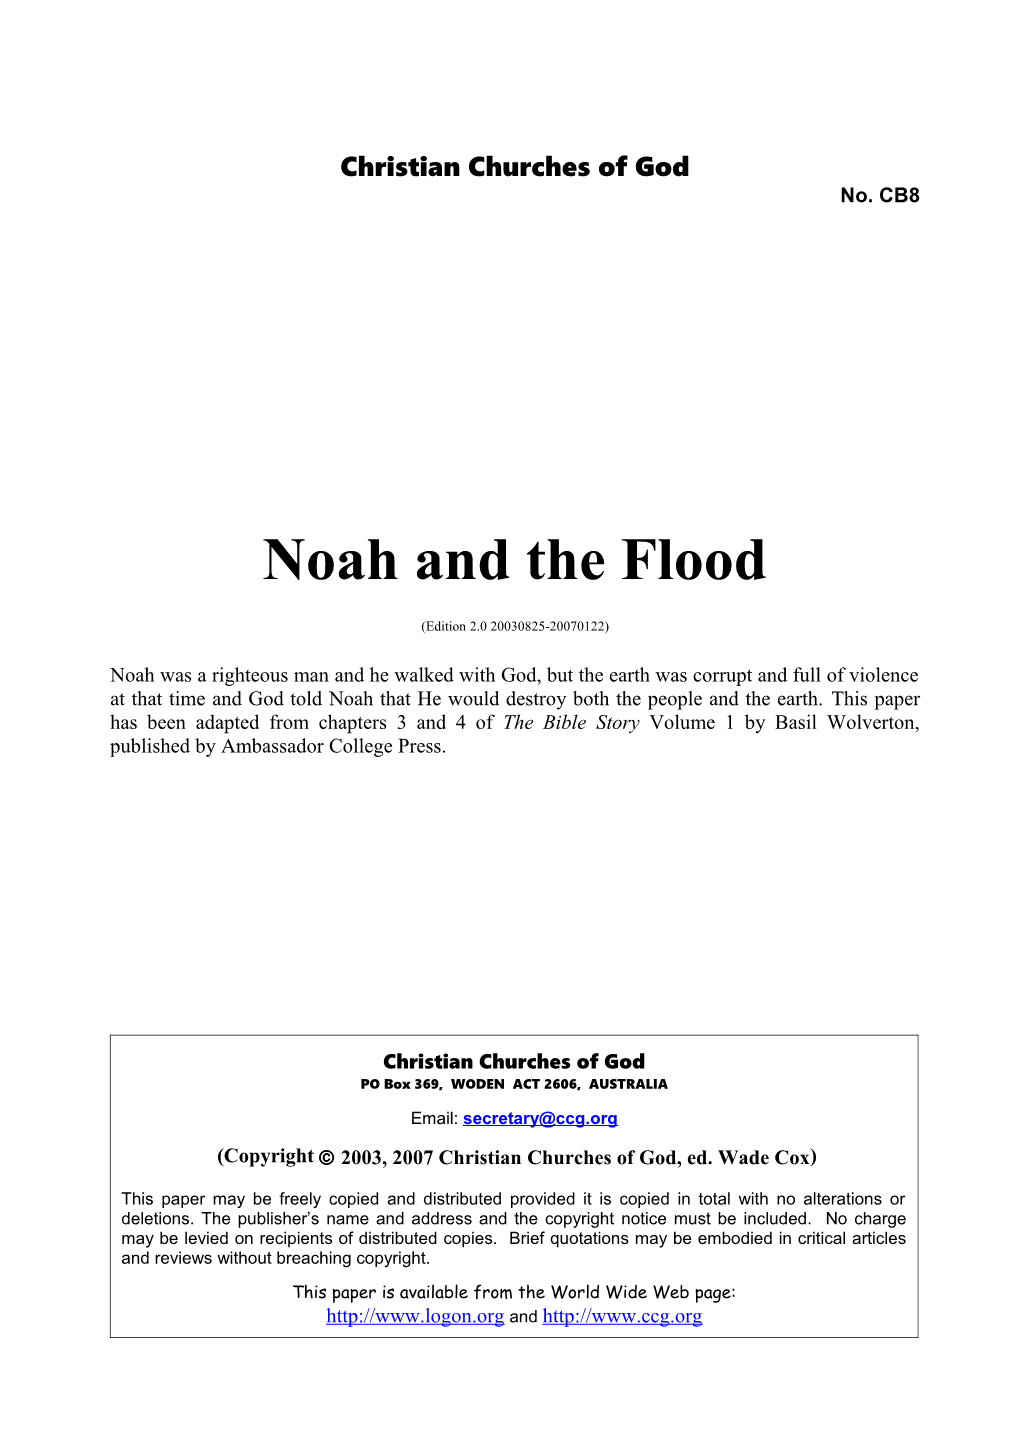 Noah and the Flood (No. CB8)